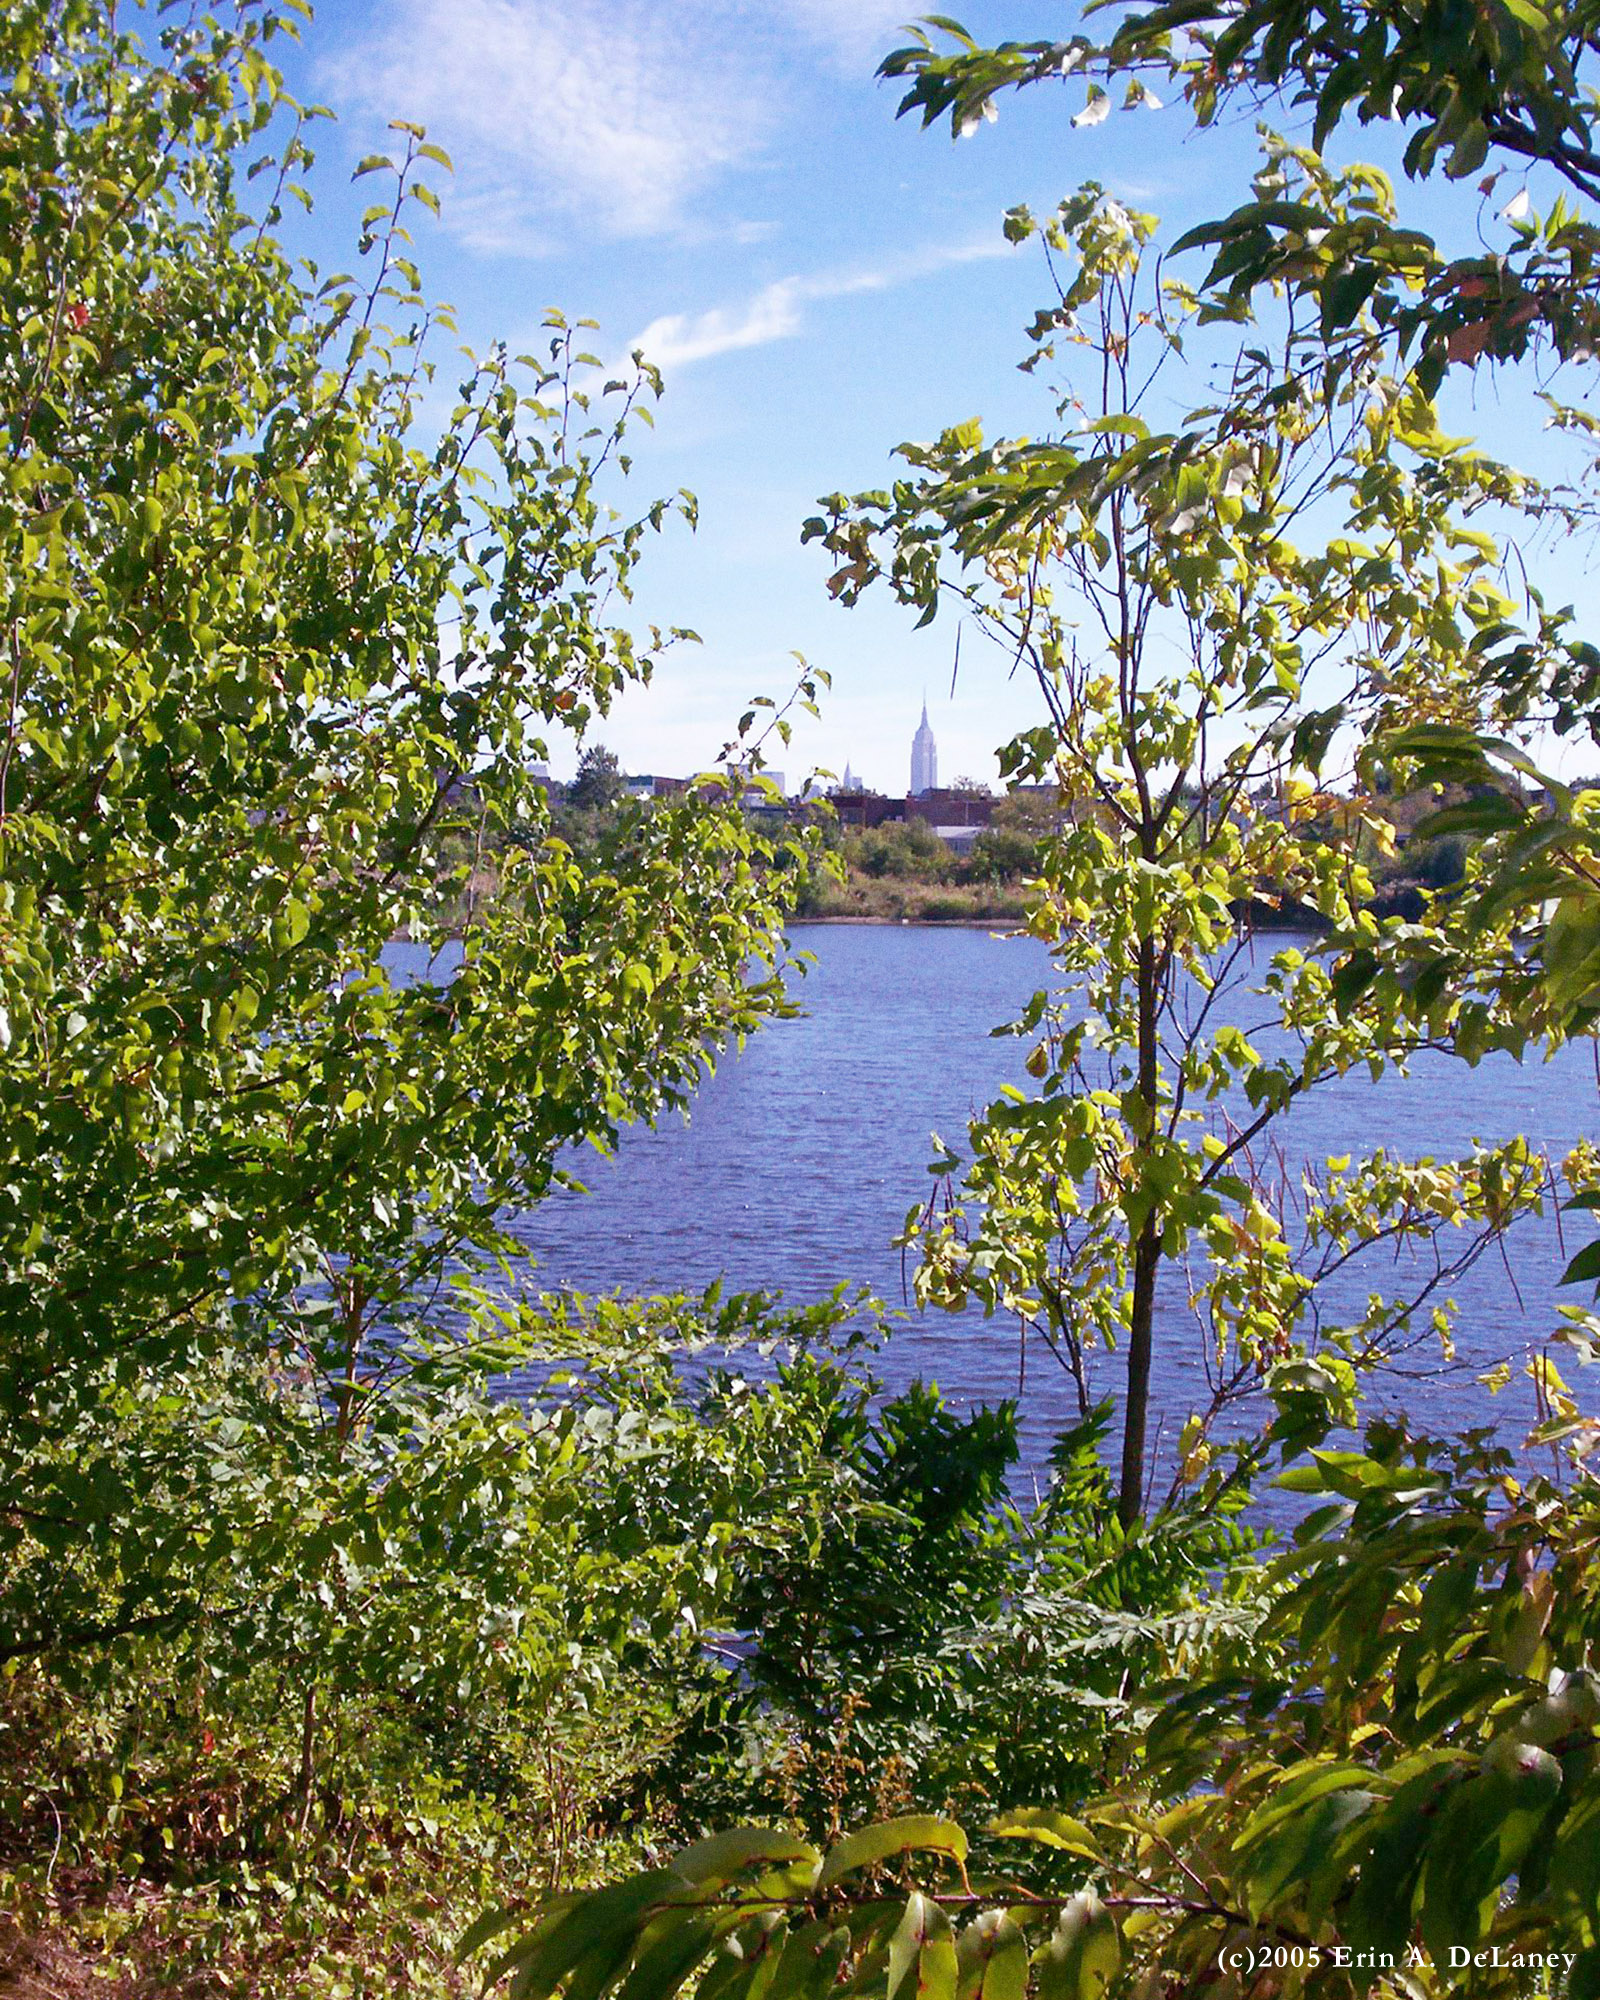 Views at the JC Reservoir, 2005